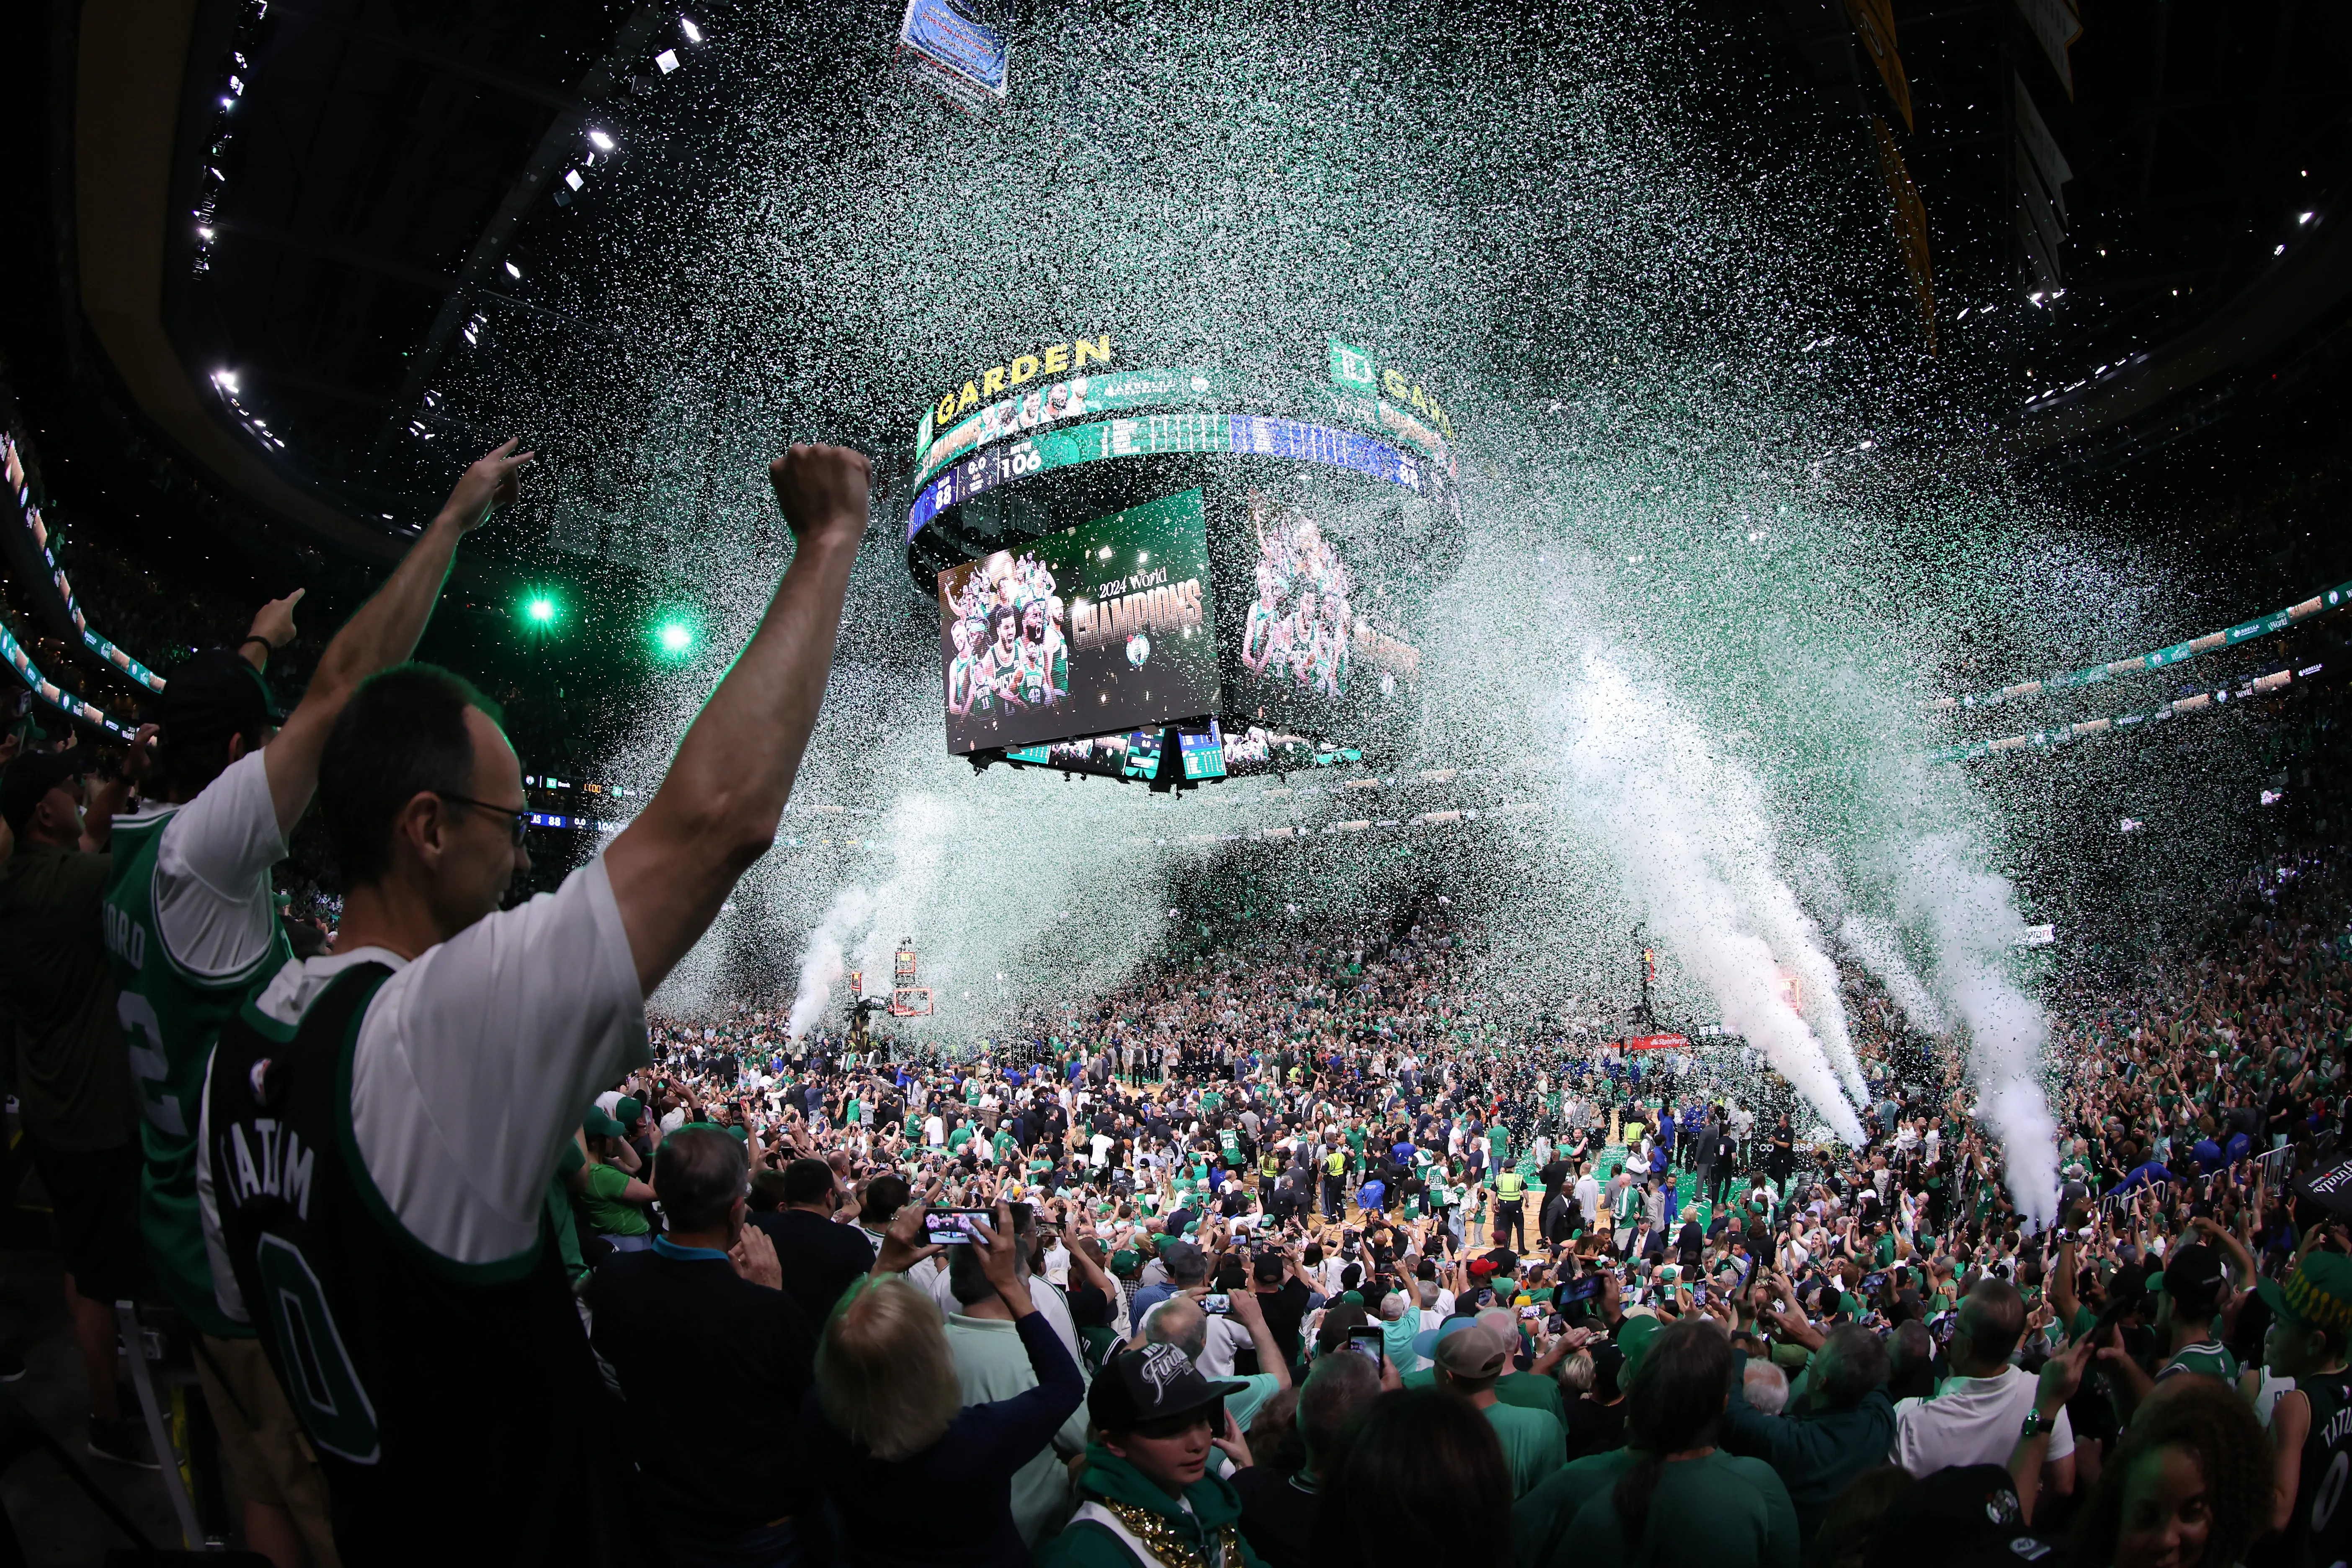 PHOTOS: The Boston Celtics are NBA champions again!